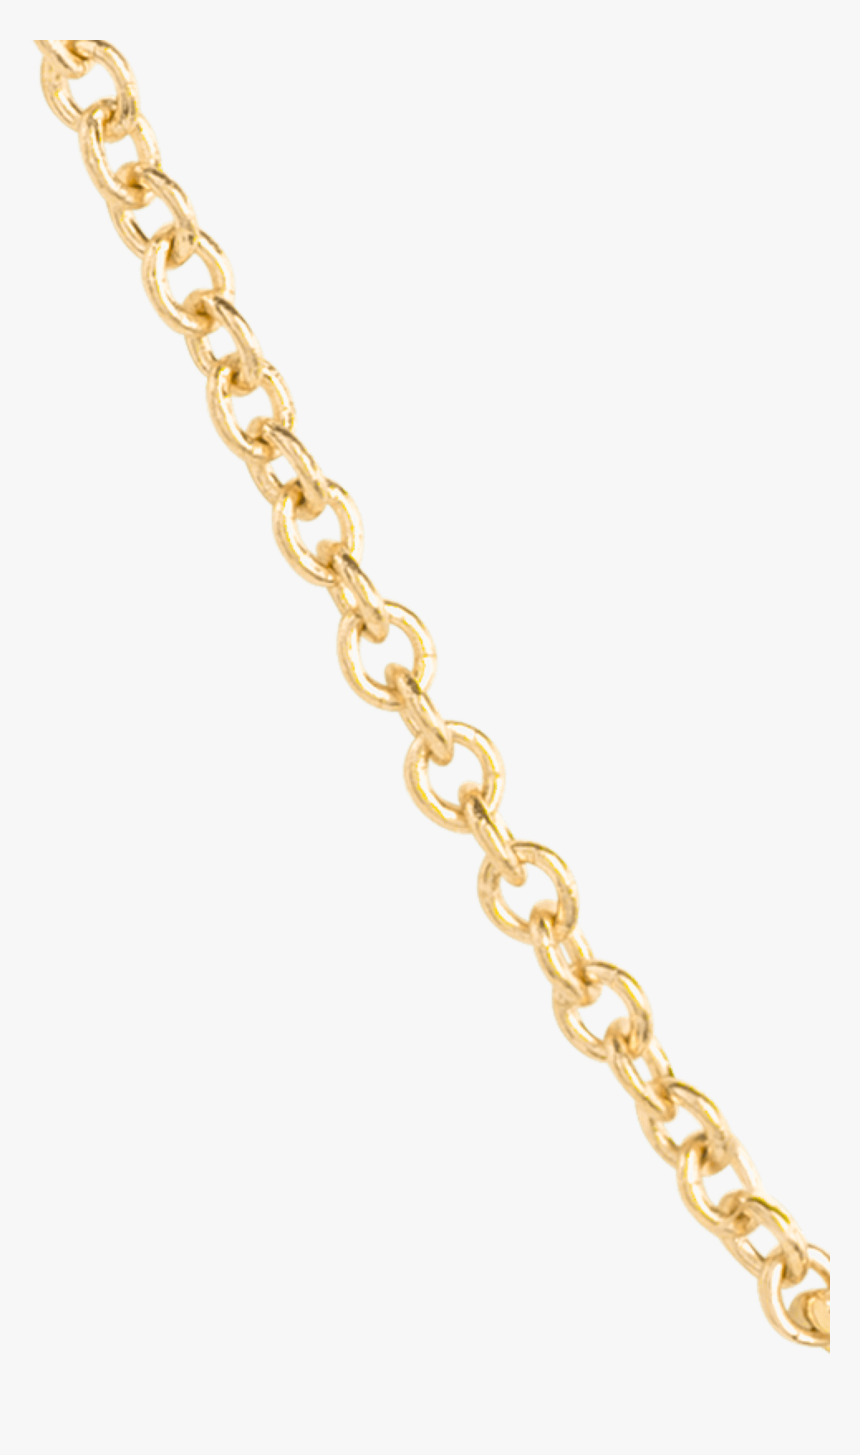 Bracelet For Women Gold, HD Png Download, Free Download